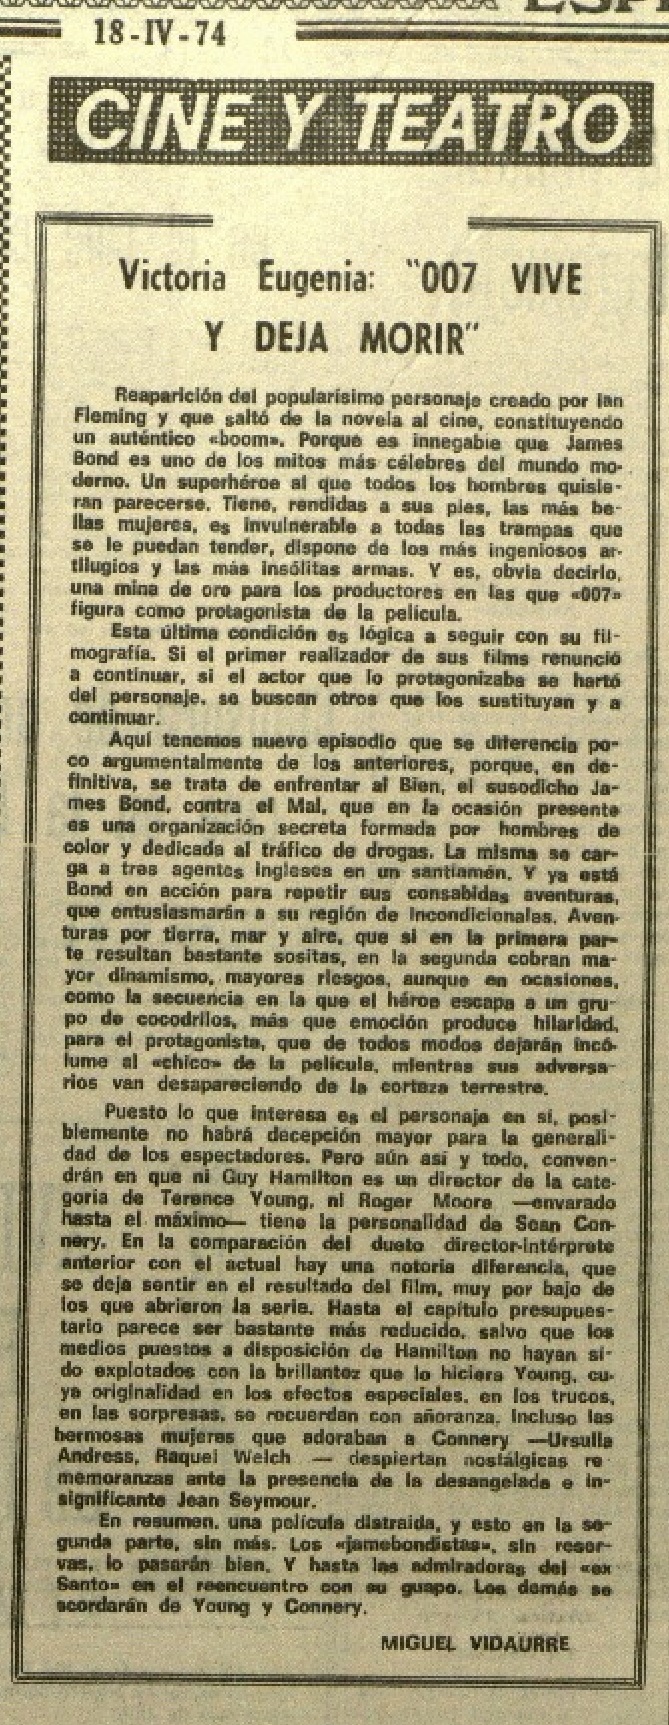 08 1974 04 18 La Voz de Espana San Sebastian 19 Critica